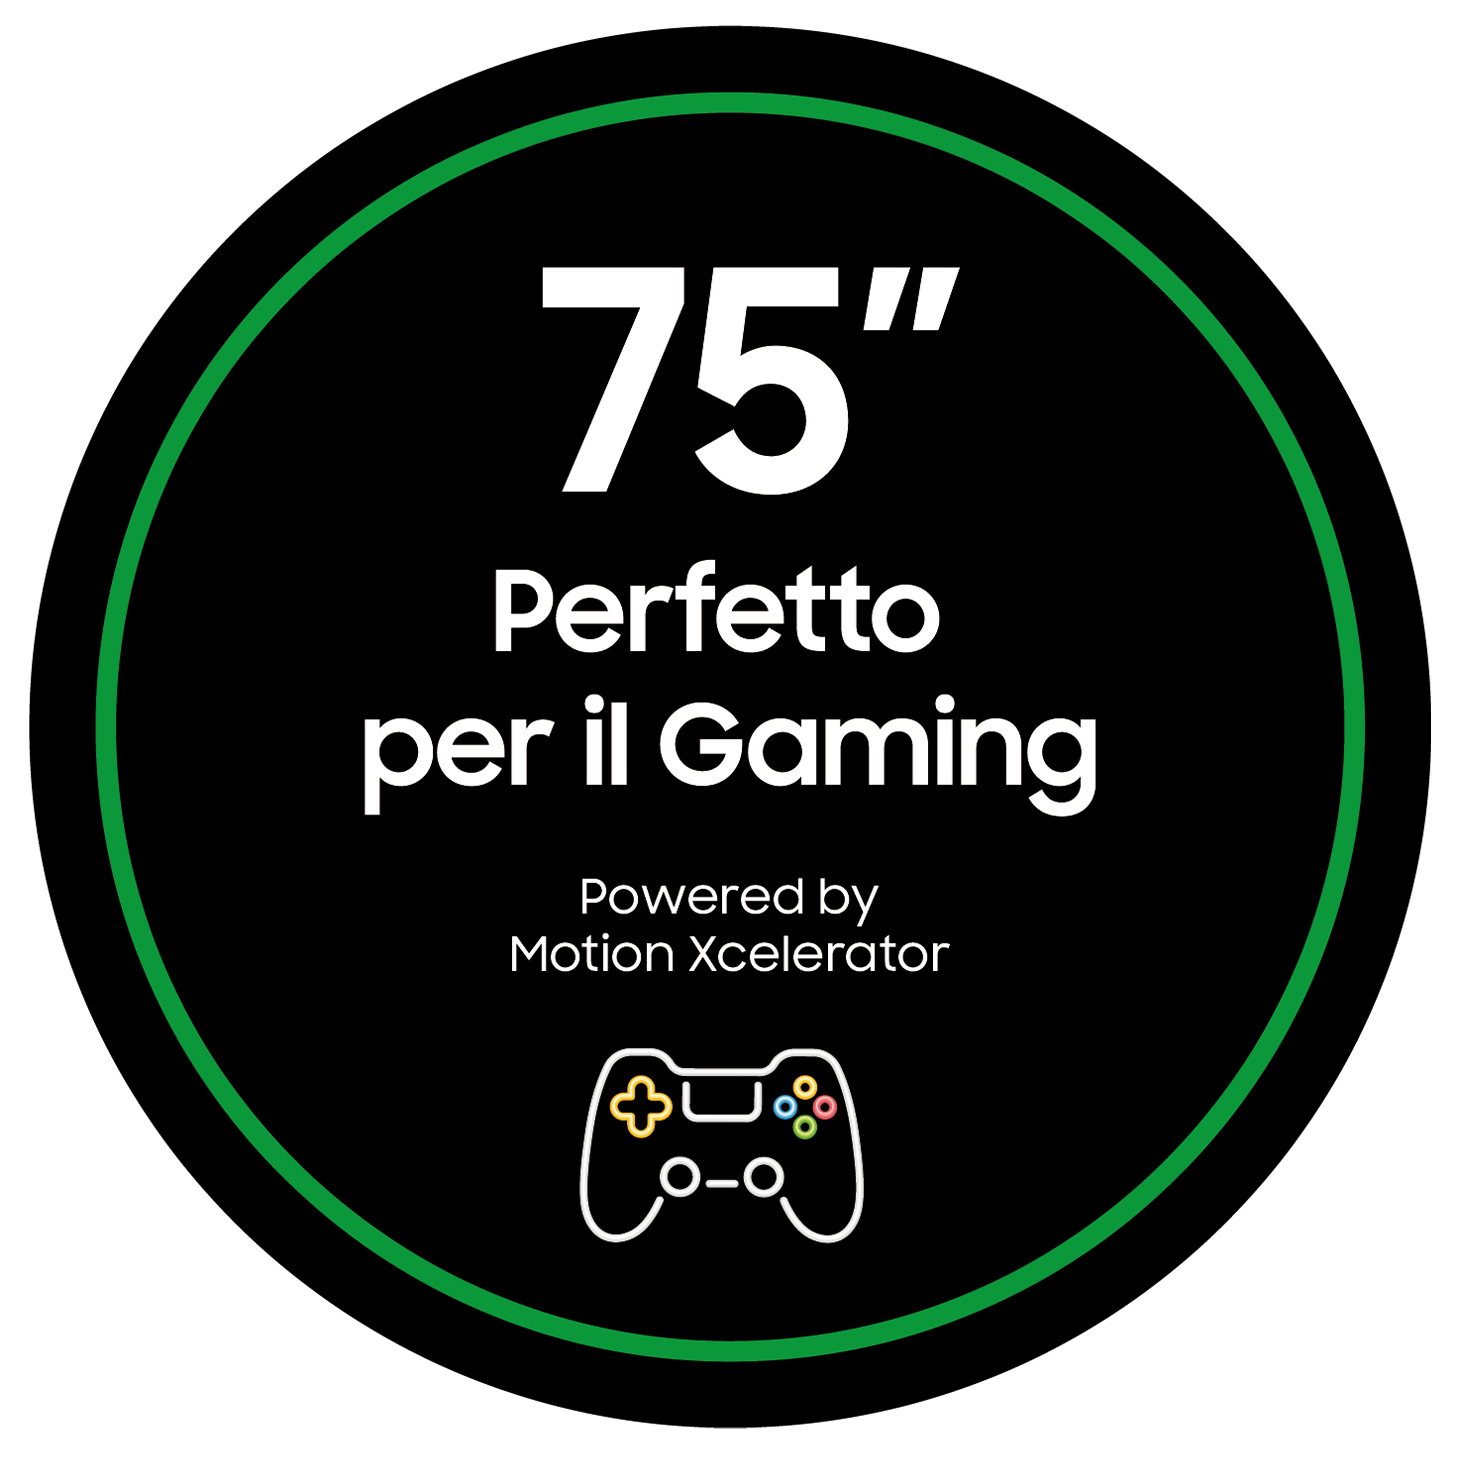 Best TV Gaming 75" logo